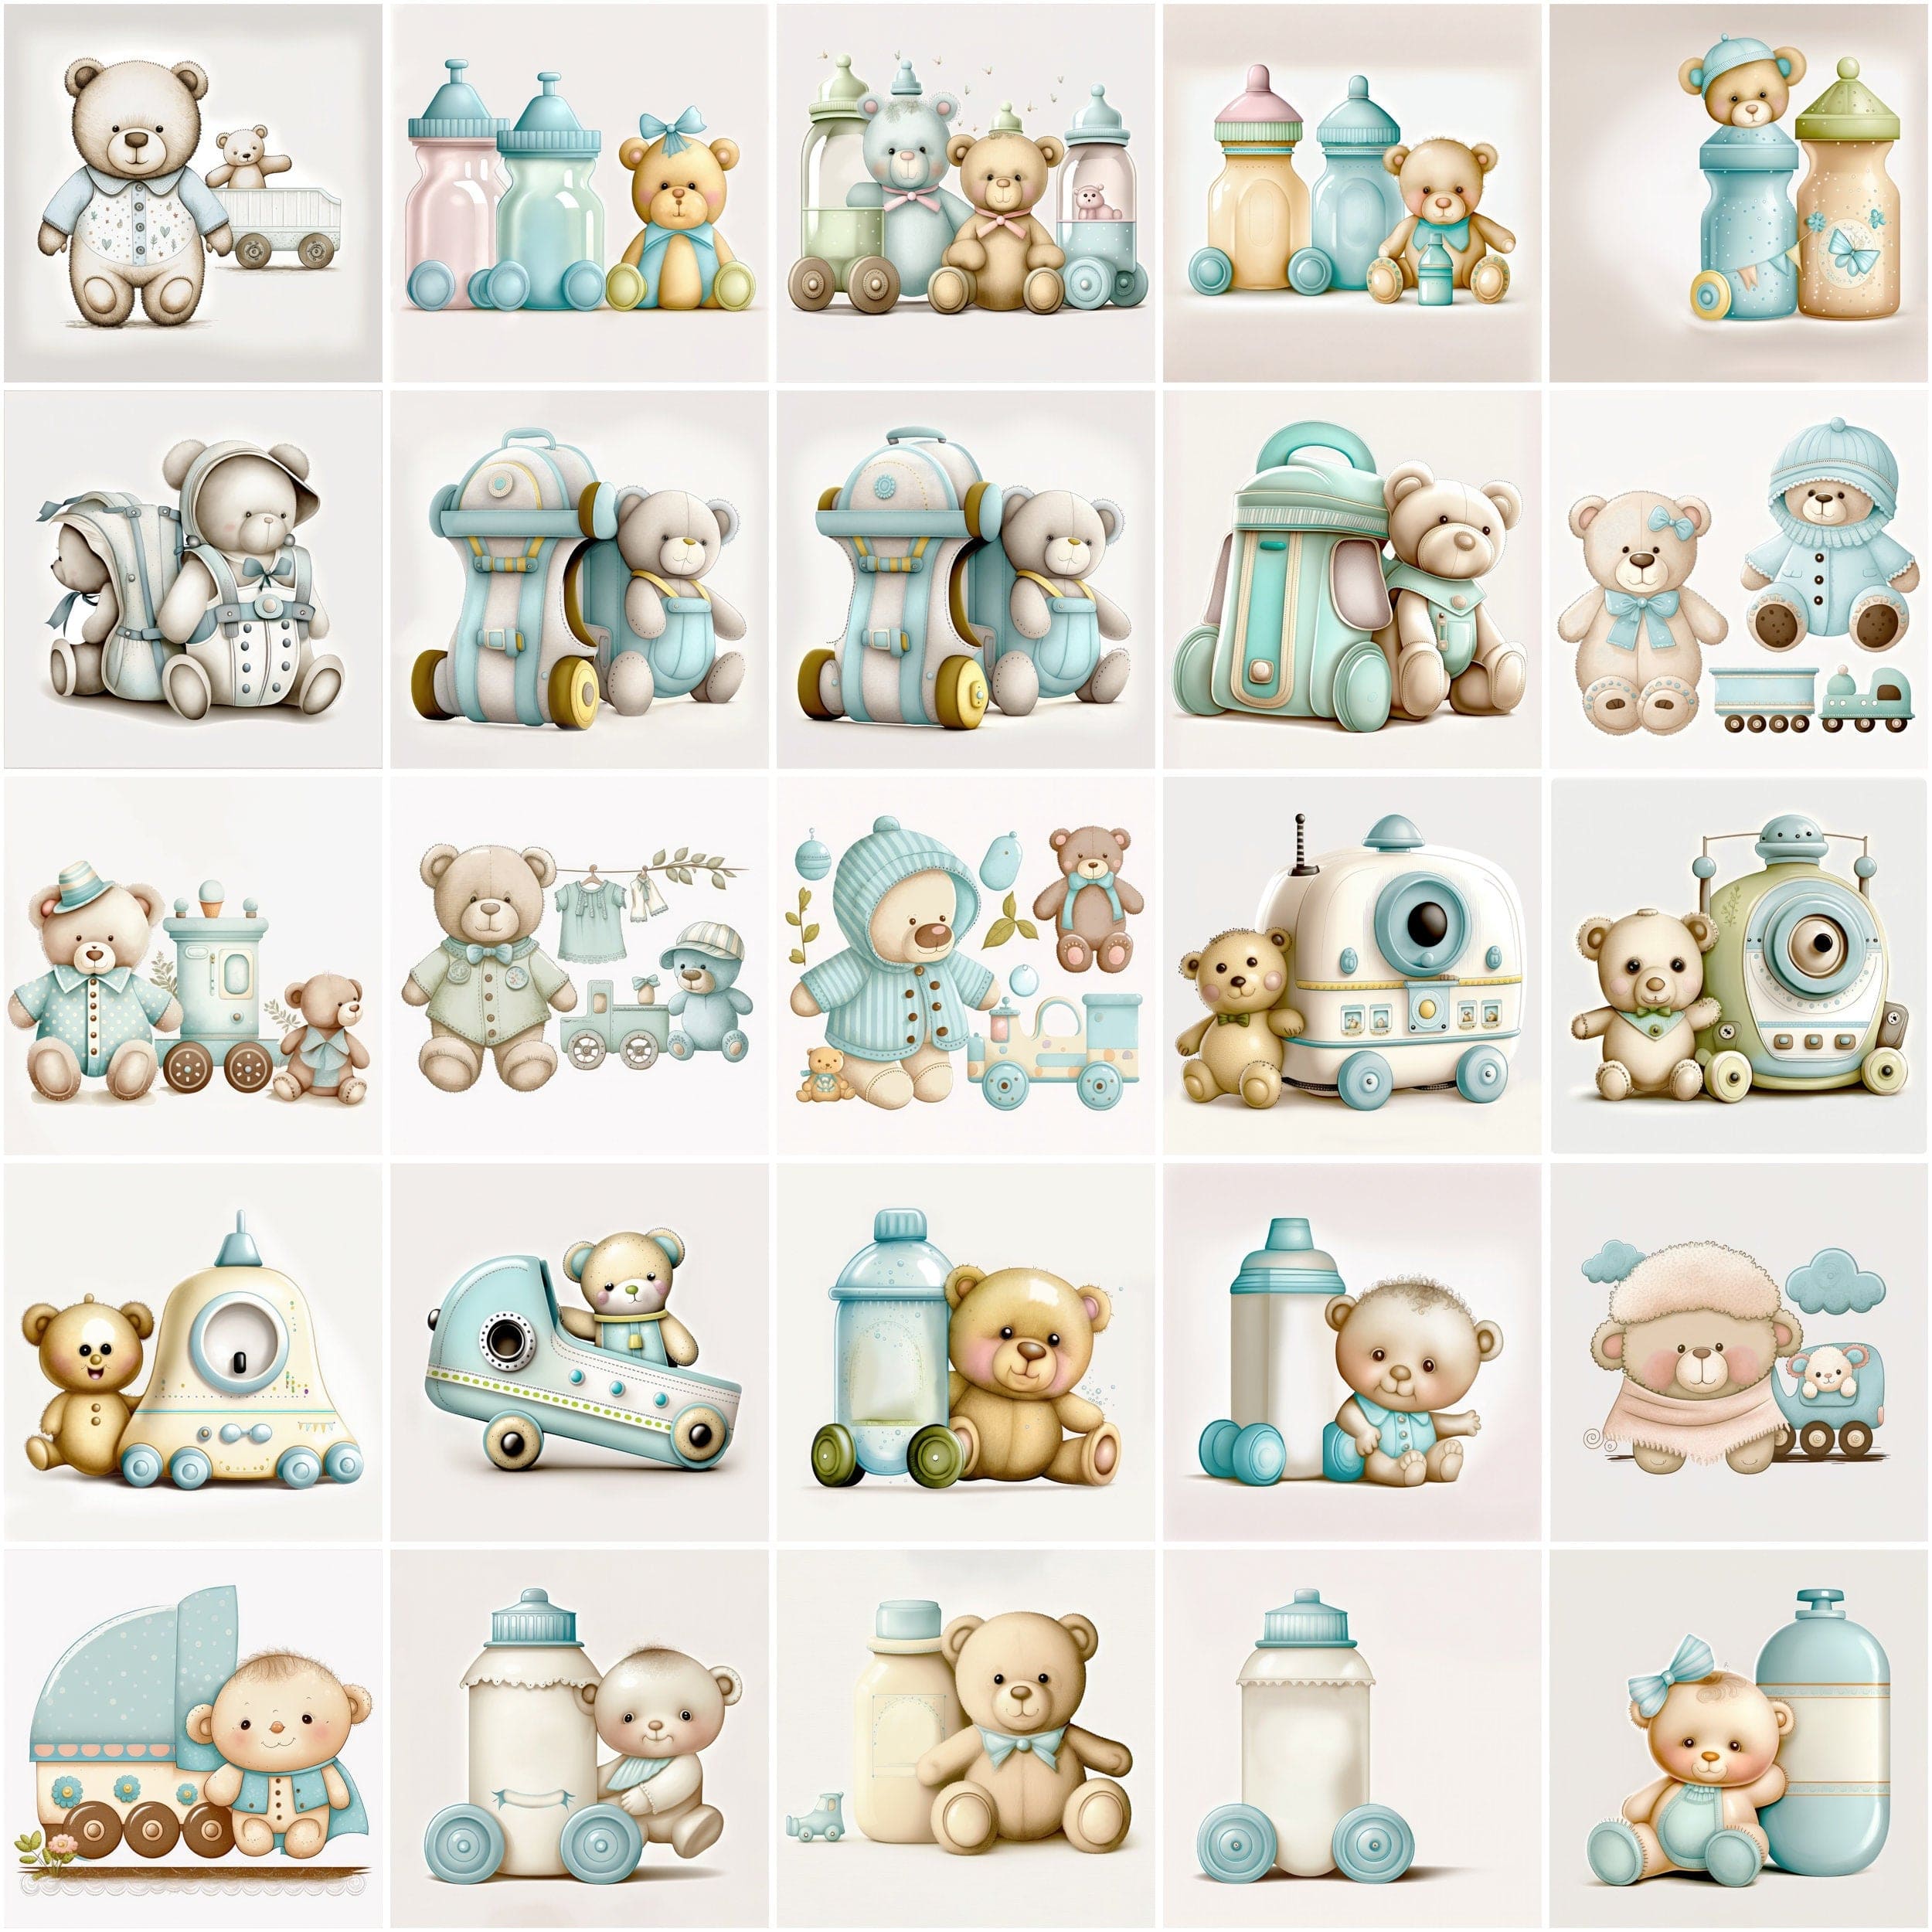 Adorable Baby Shower Illustrations Bundle - Boy Edition - 100 Premium Graphics for Invitations, Decorations, and More Digital Download Sumobundle